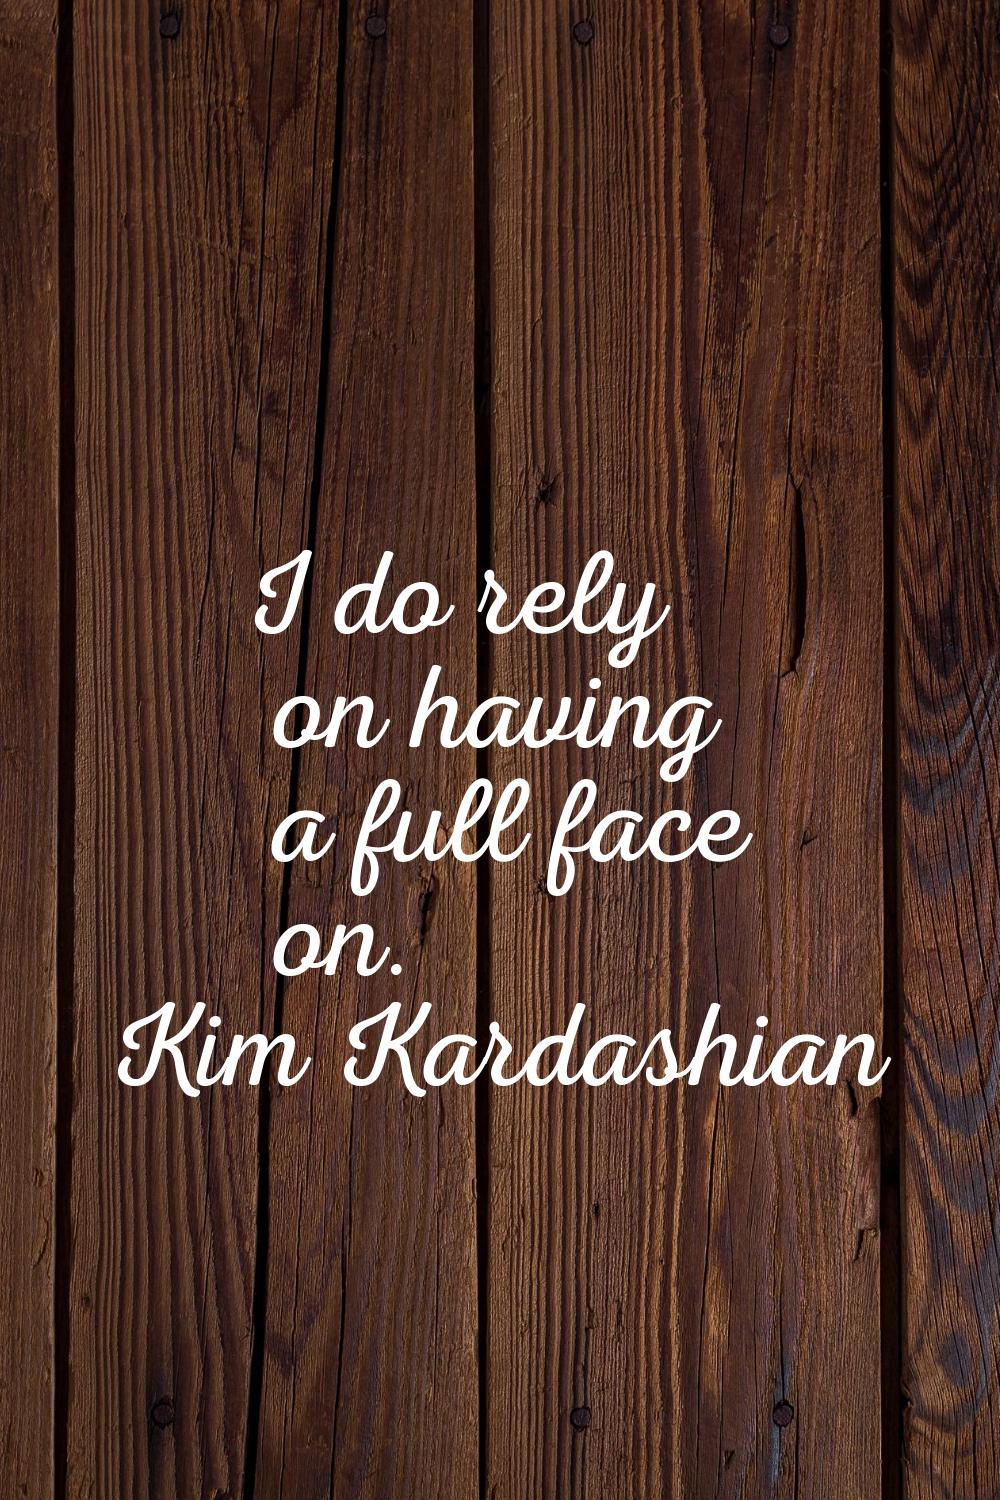 I do rely on having a full face on.